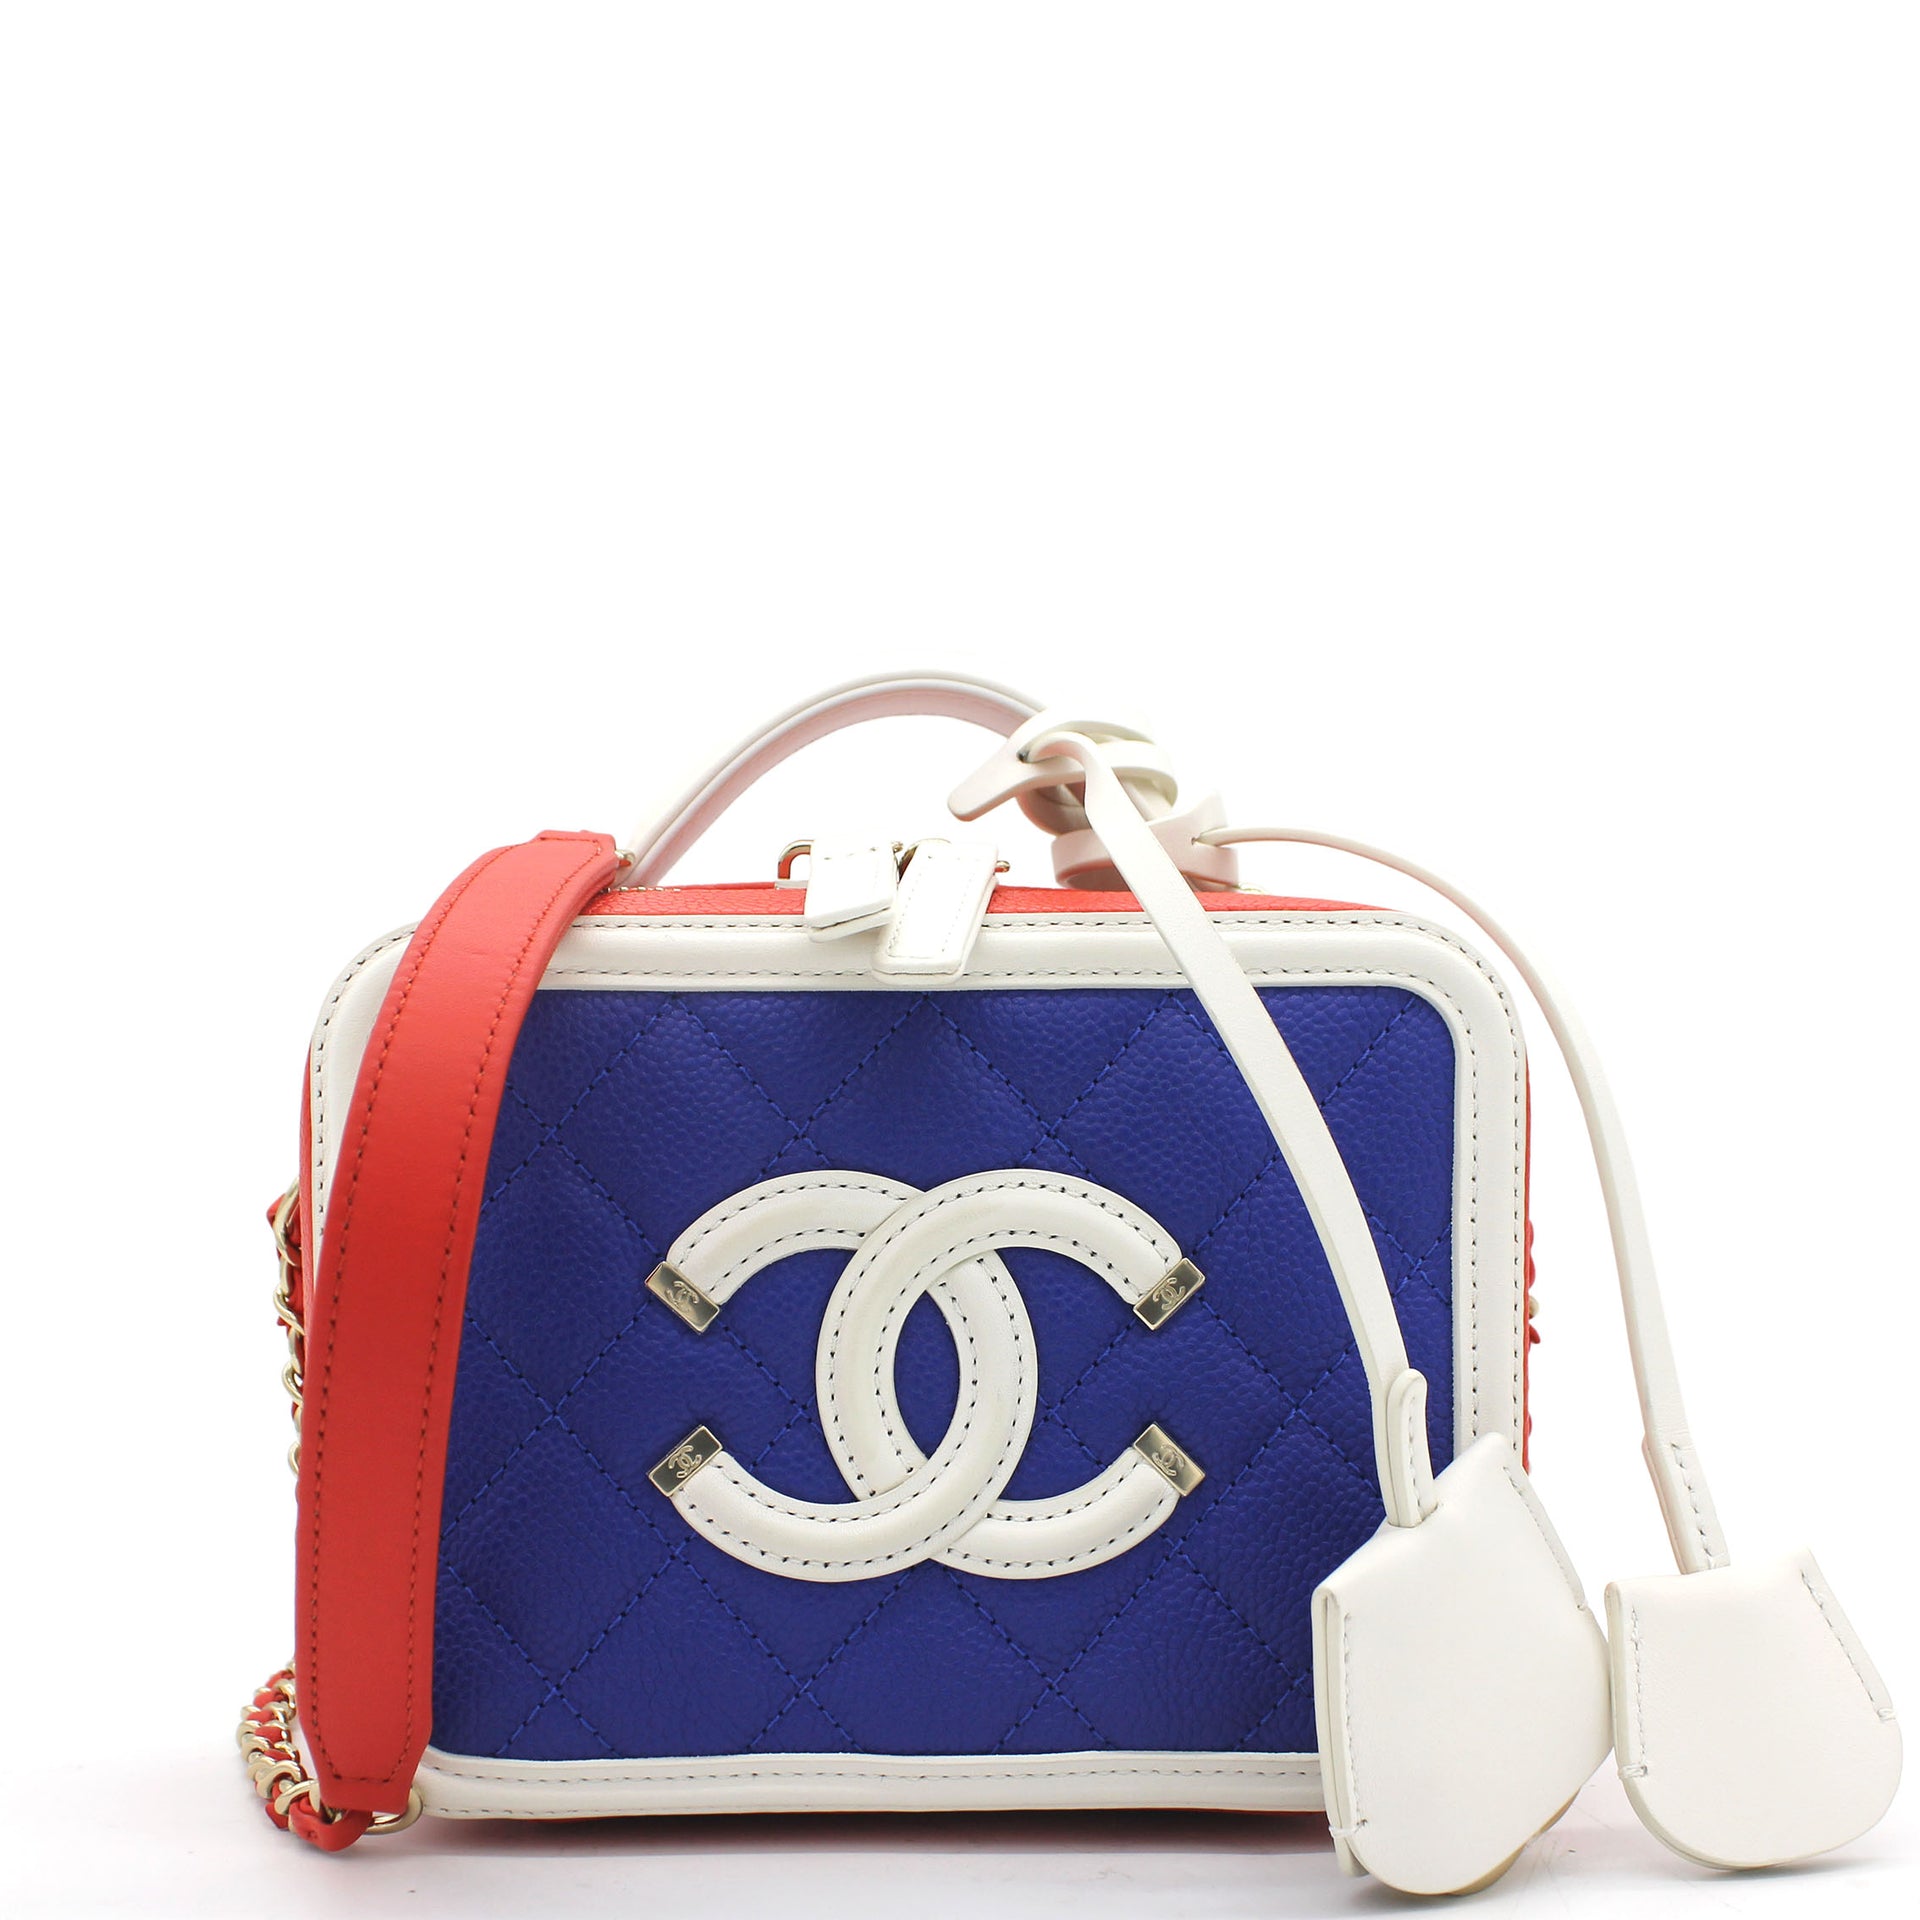 19 Chanel vanity case ideas  chanel vanity case, chanel bag, chanel